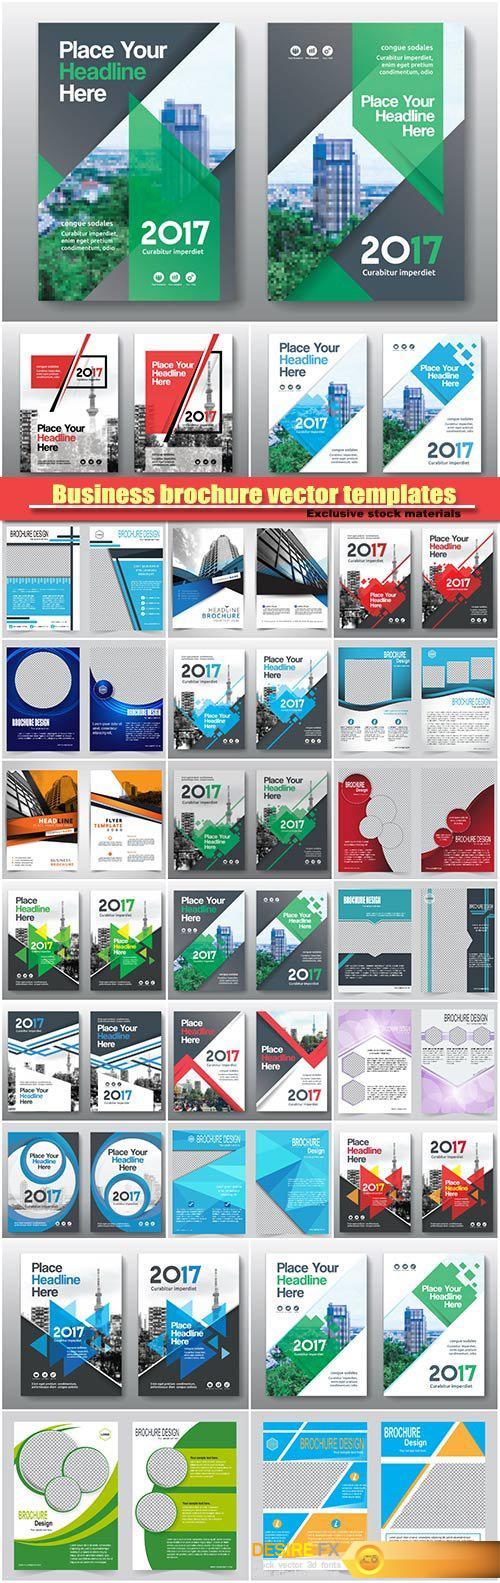 Business brochure vector, flyers templates